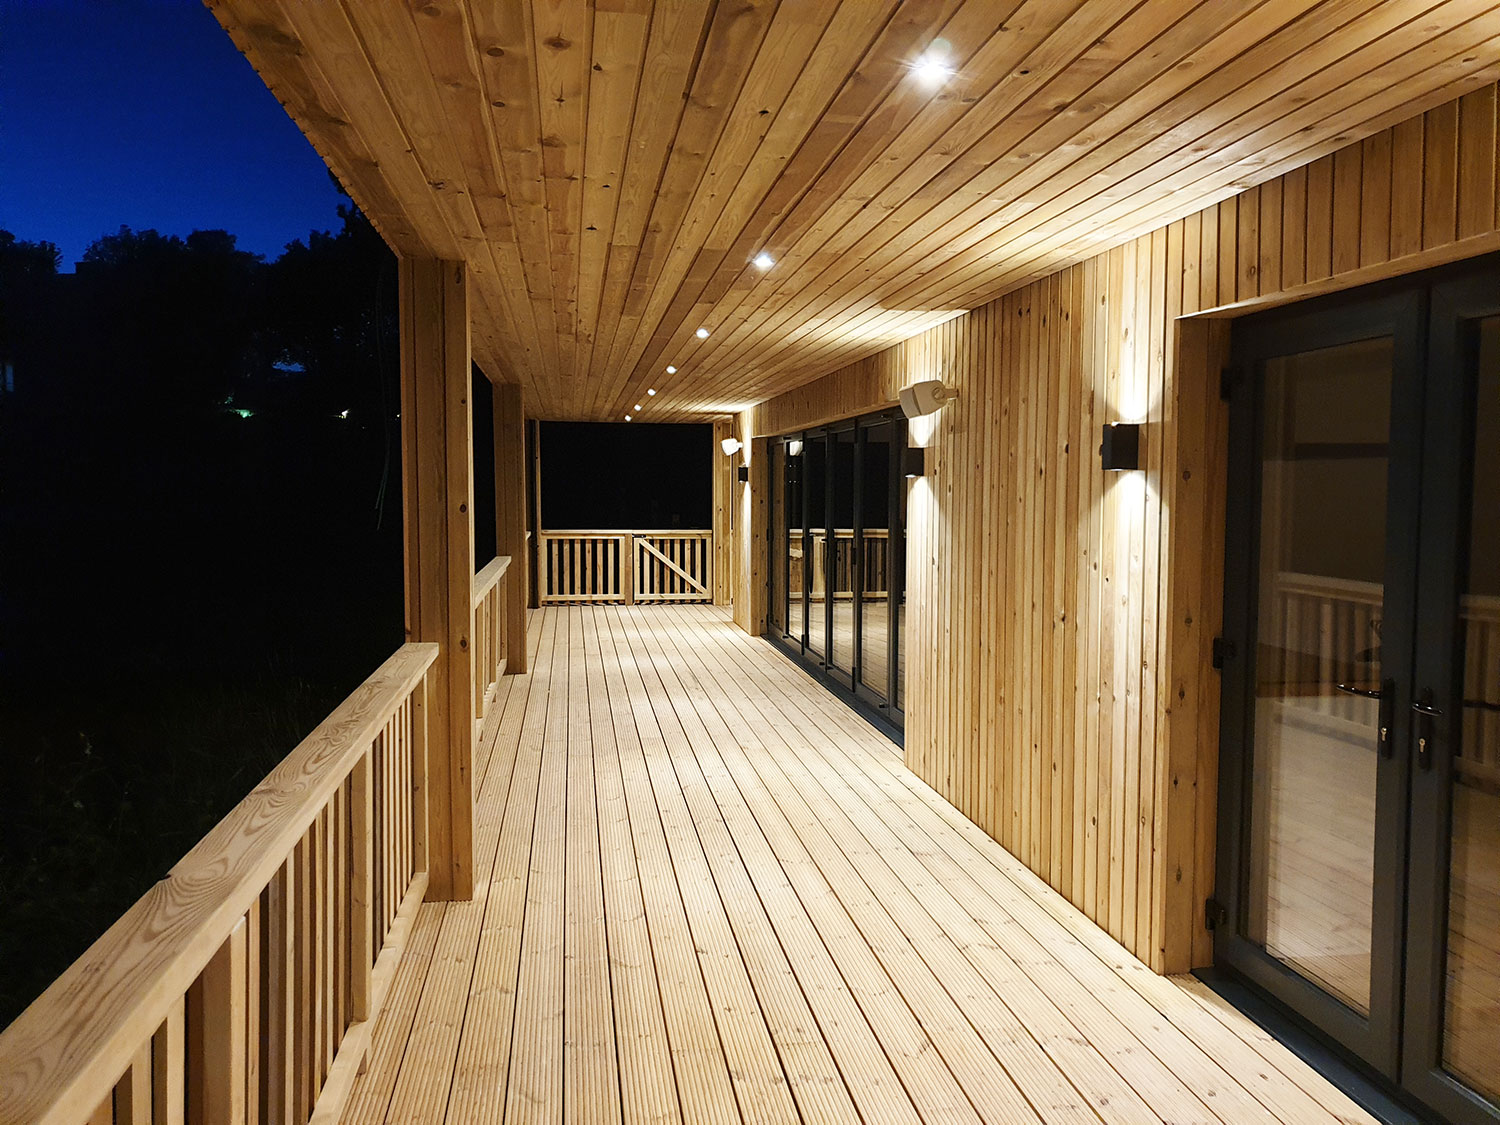 Wooden decking and roof overhang for designer garden room office cabin